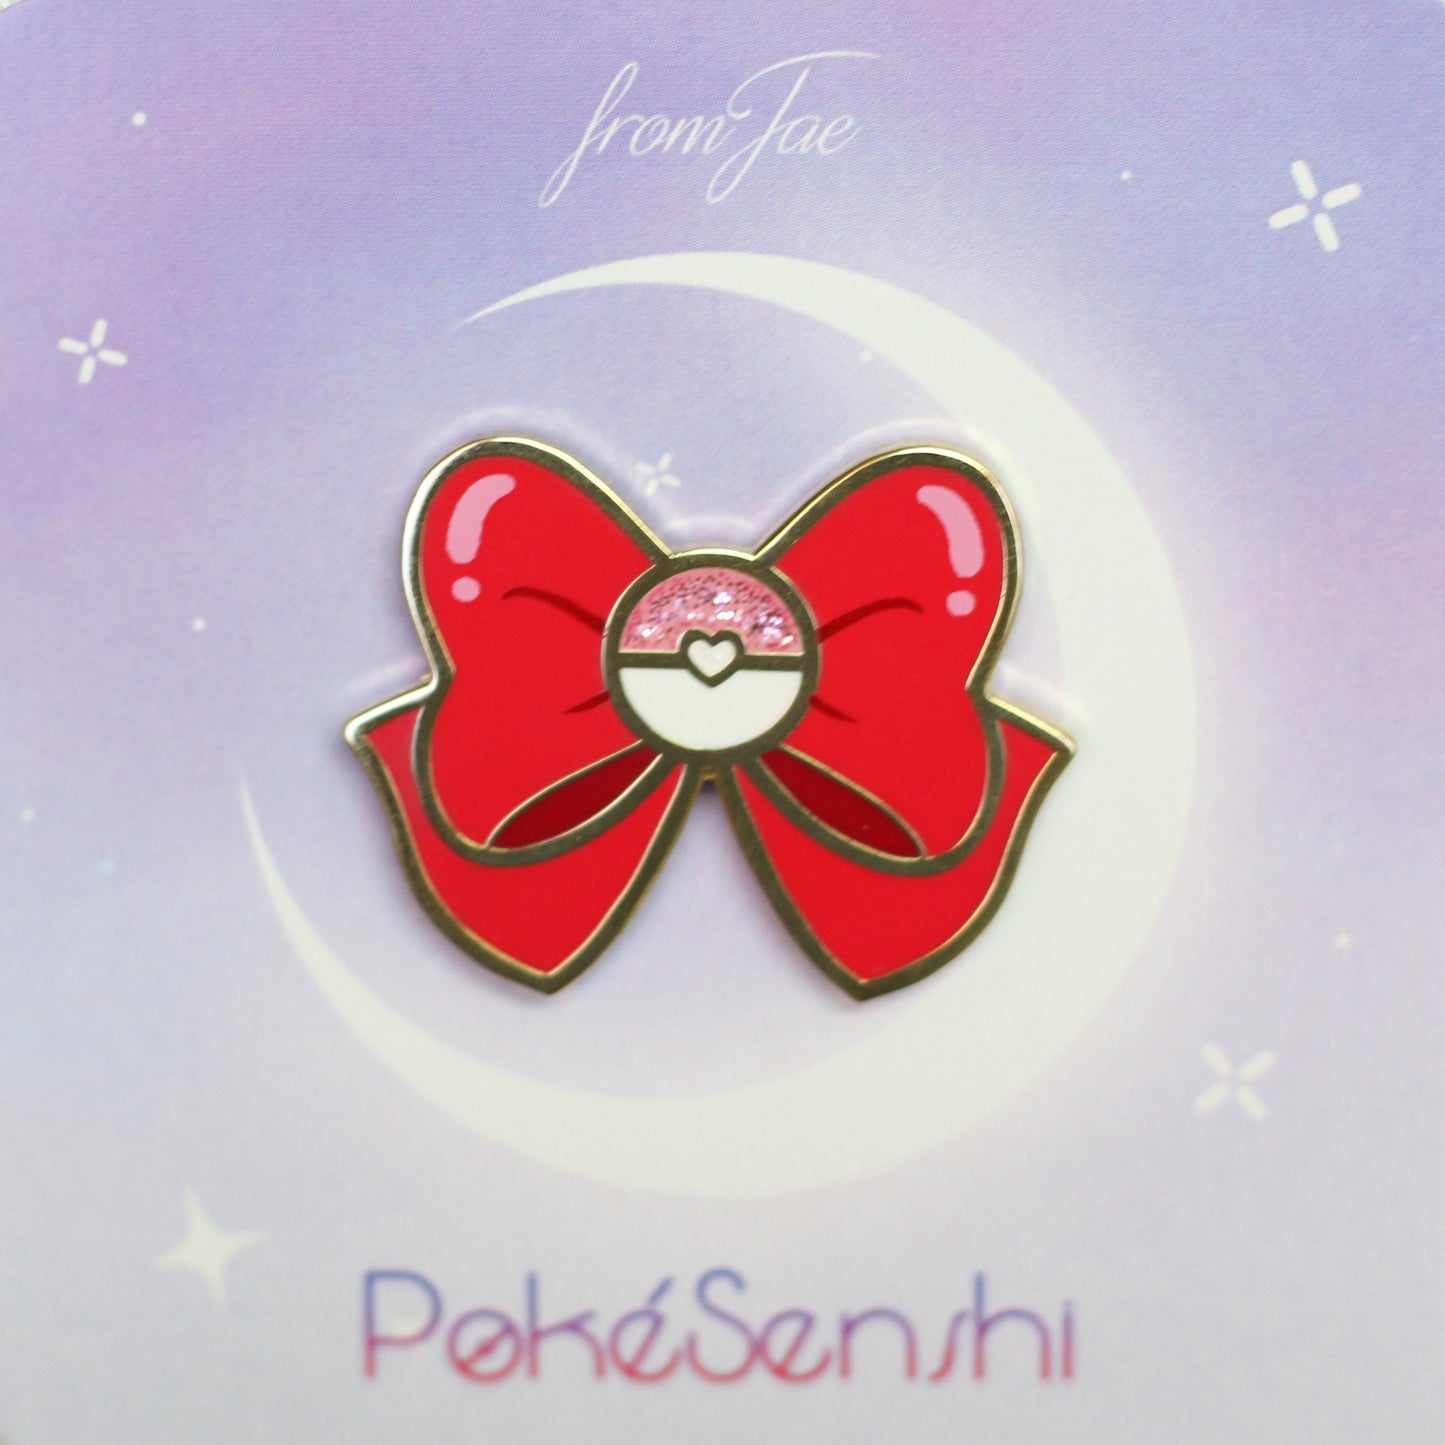 Pokesenshi - Pokesenshi Badge ( Pokeball x Sailor Moon Bow )